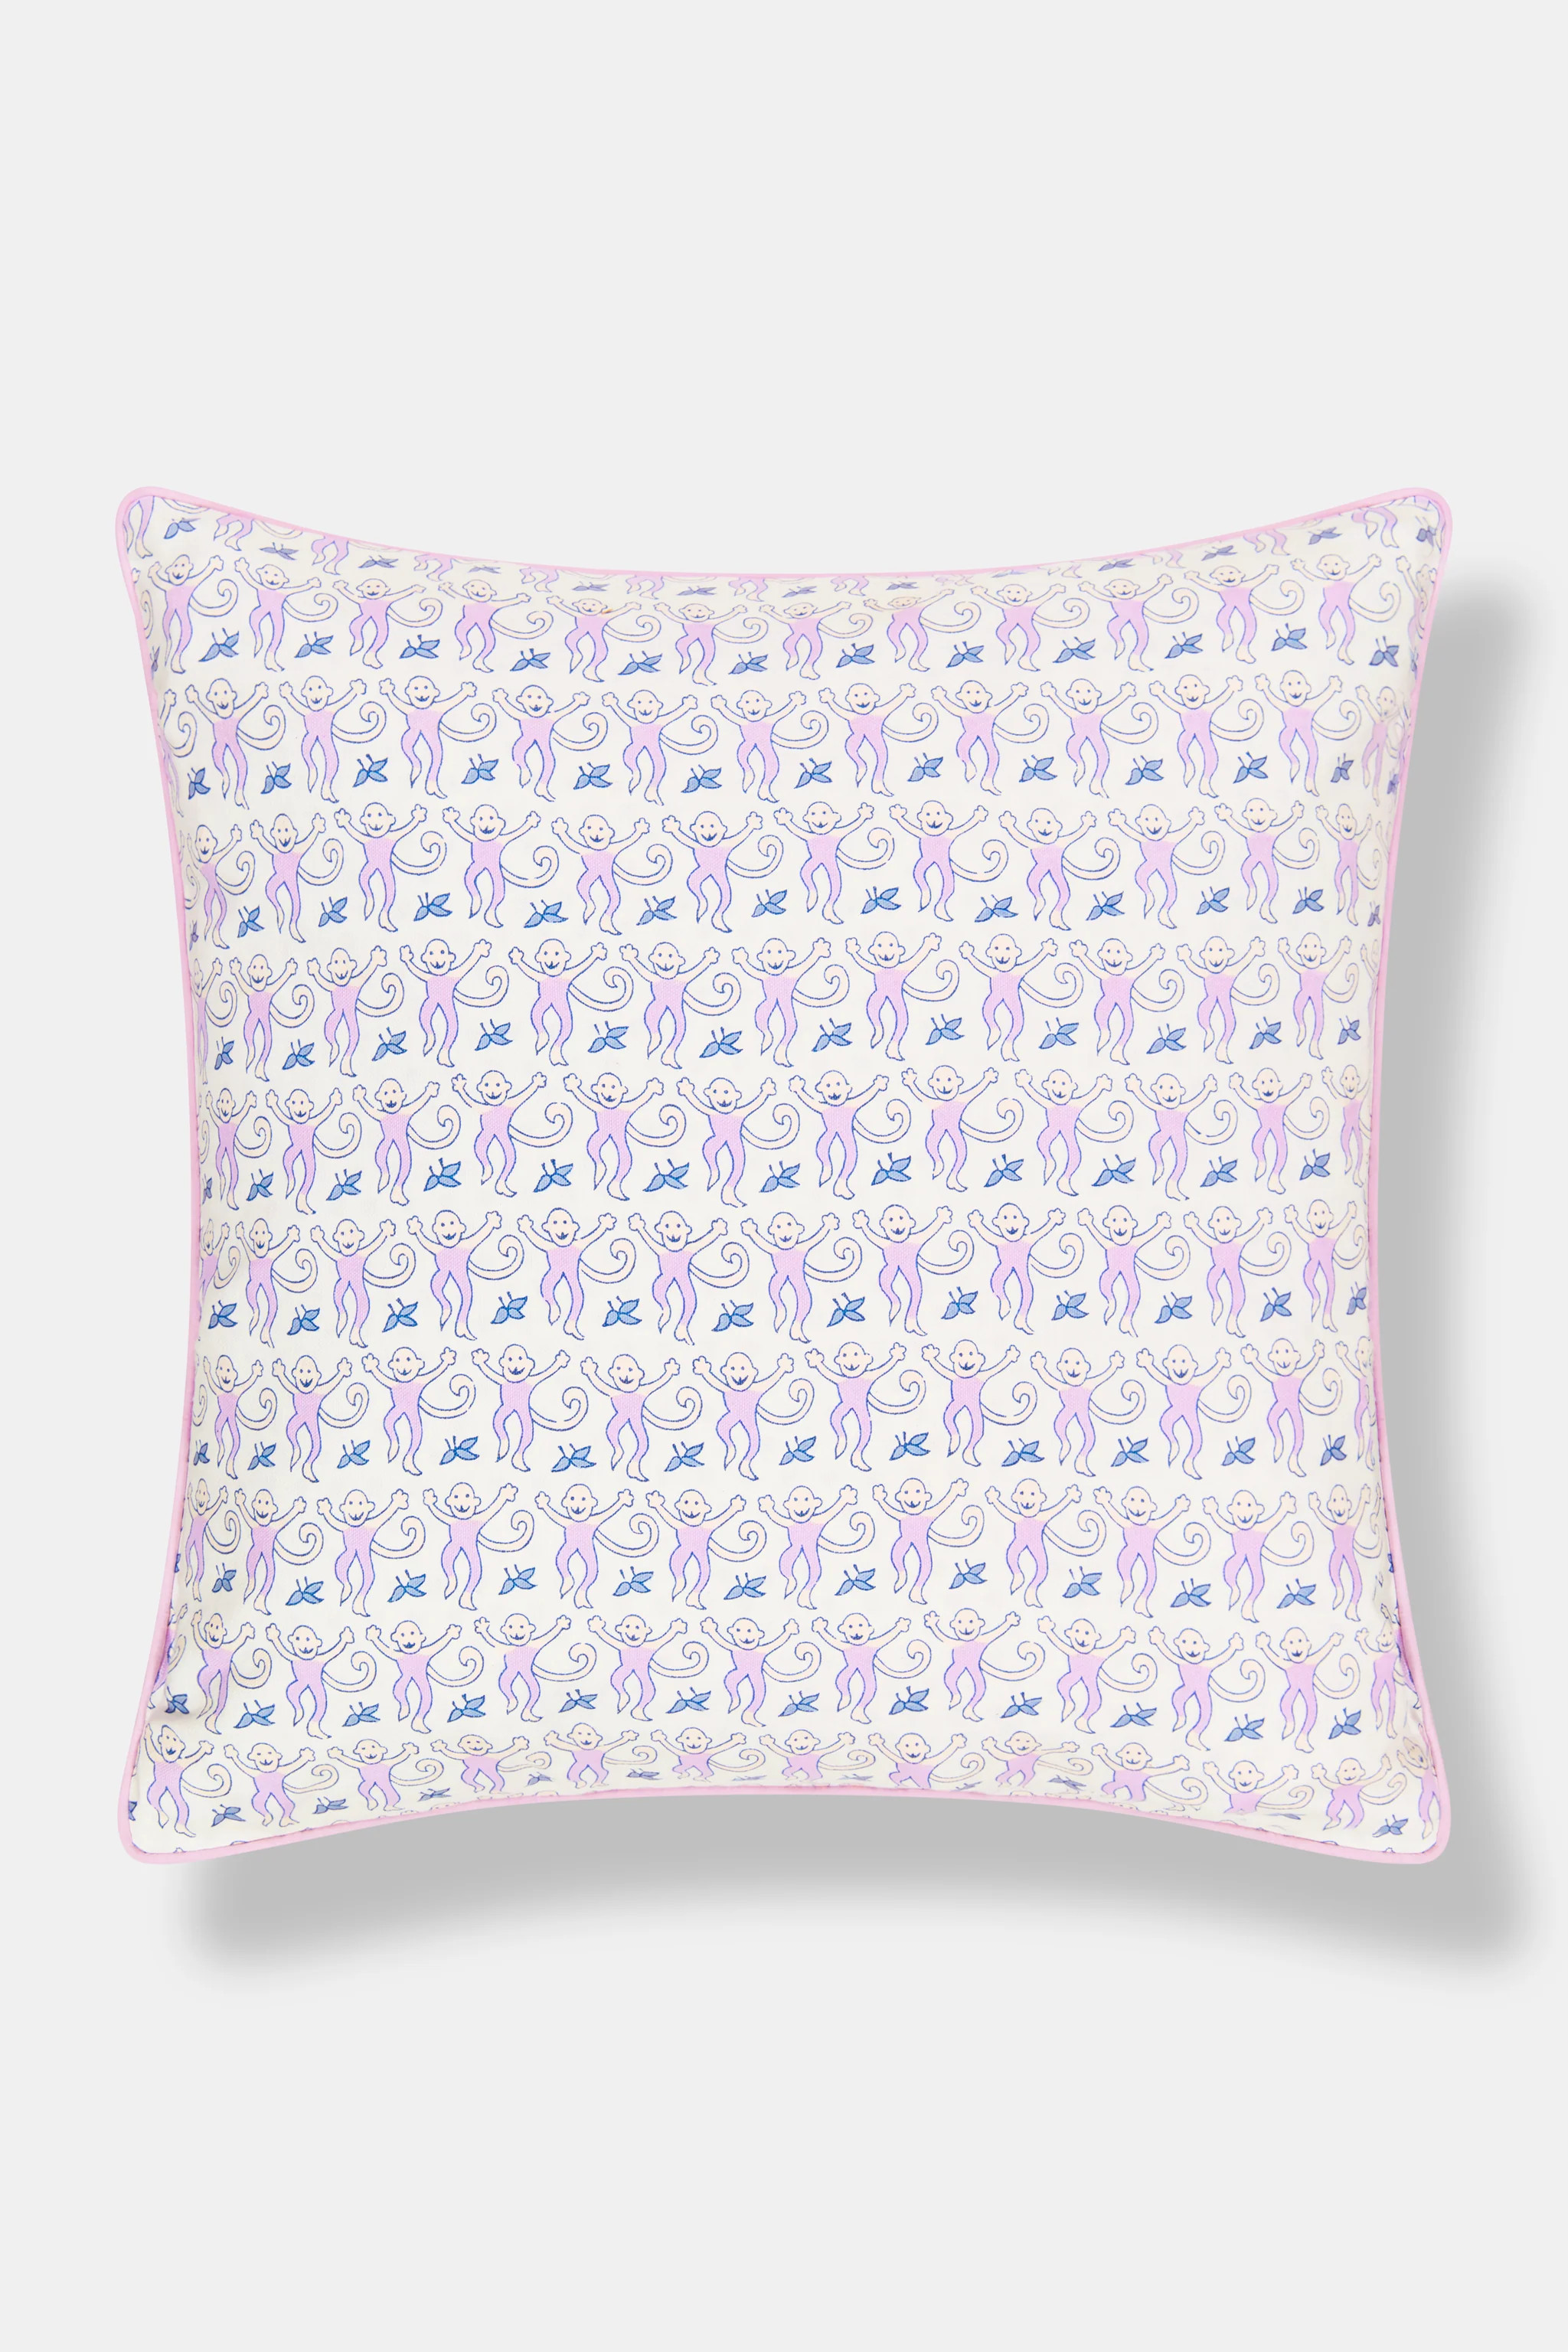 Monkey Decorative Pillow | Roller Rabbit | Roller Rabbit